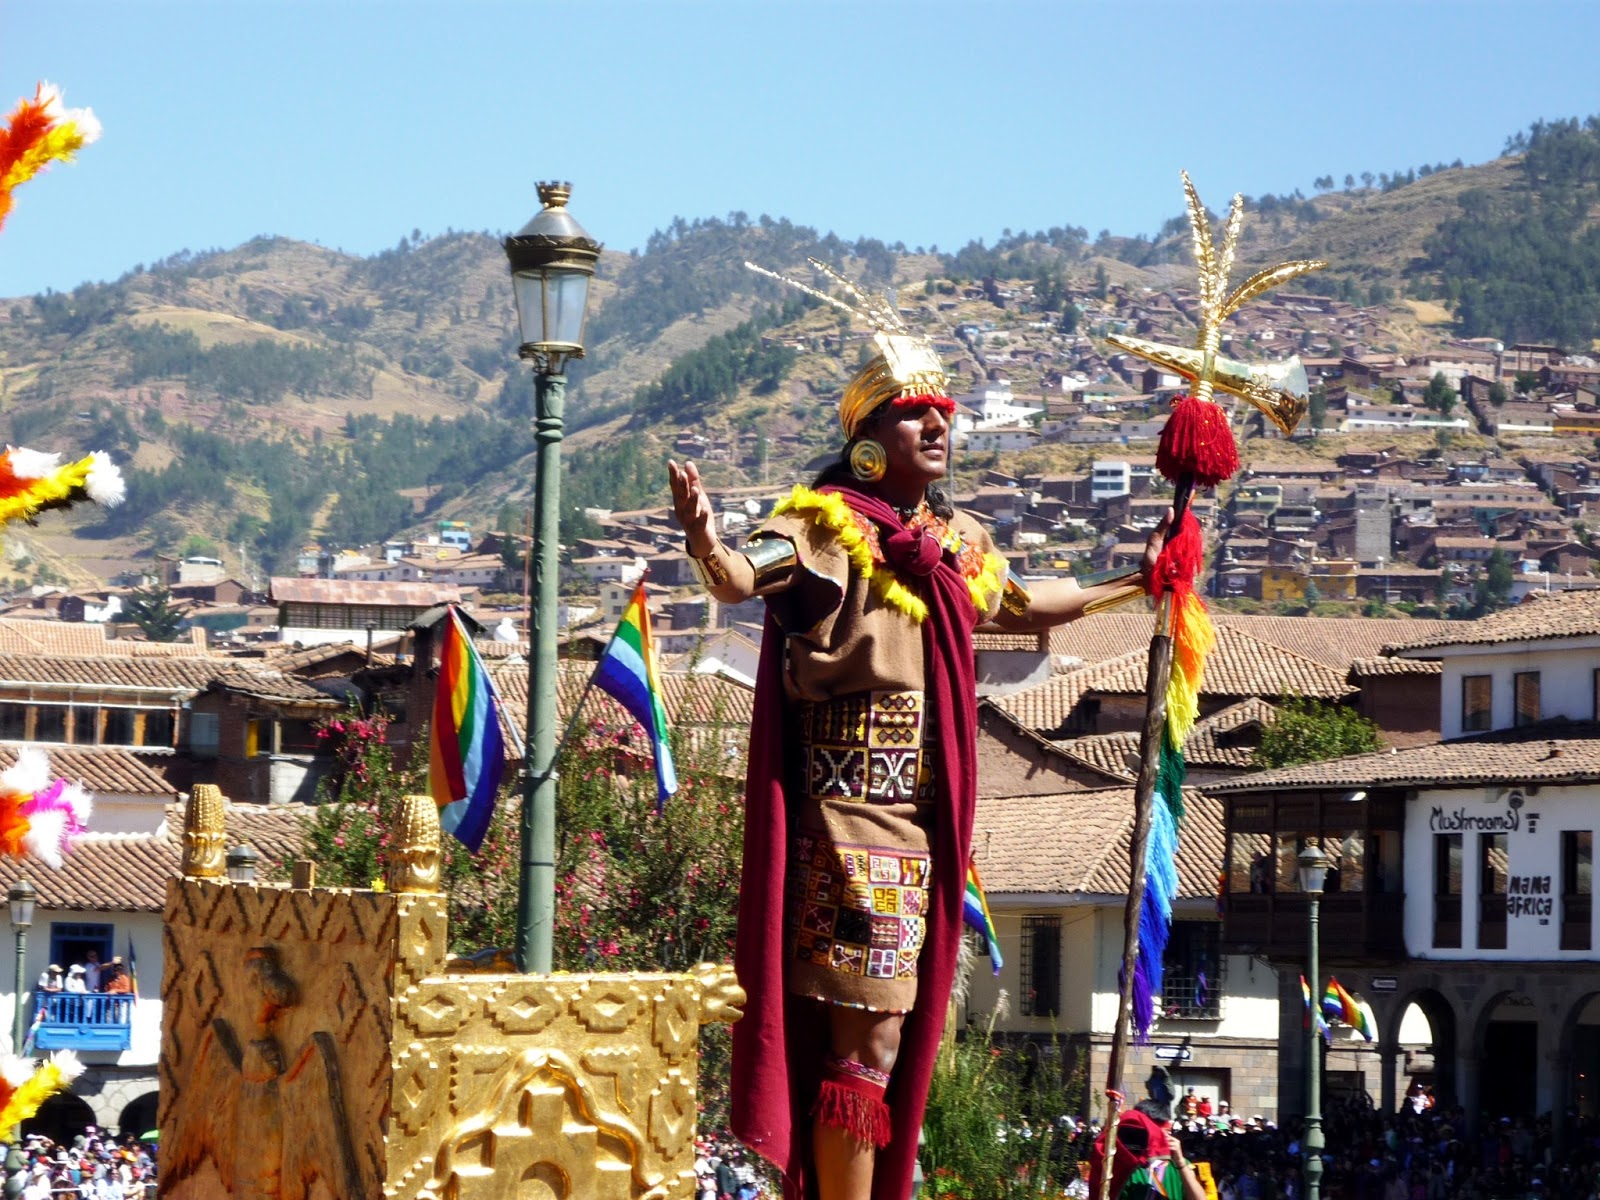 http://2.bp.blogspot.com/-PDbU3Ghr_dk/UcGqnh_9kCI/AAAAAAAAG0Y/H19oIu2_bB8/s1600/Cusco-Inti-Raymi-junio-2013-radio-picaflor-peru-fiestas-del-sol.JPG